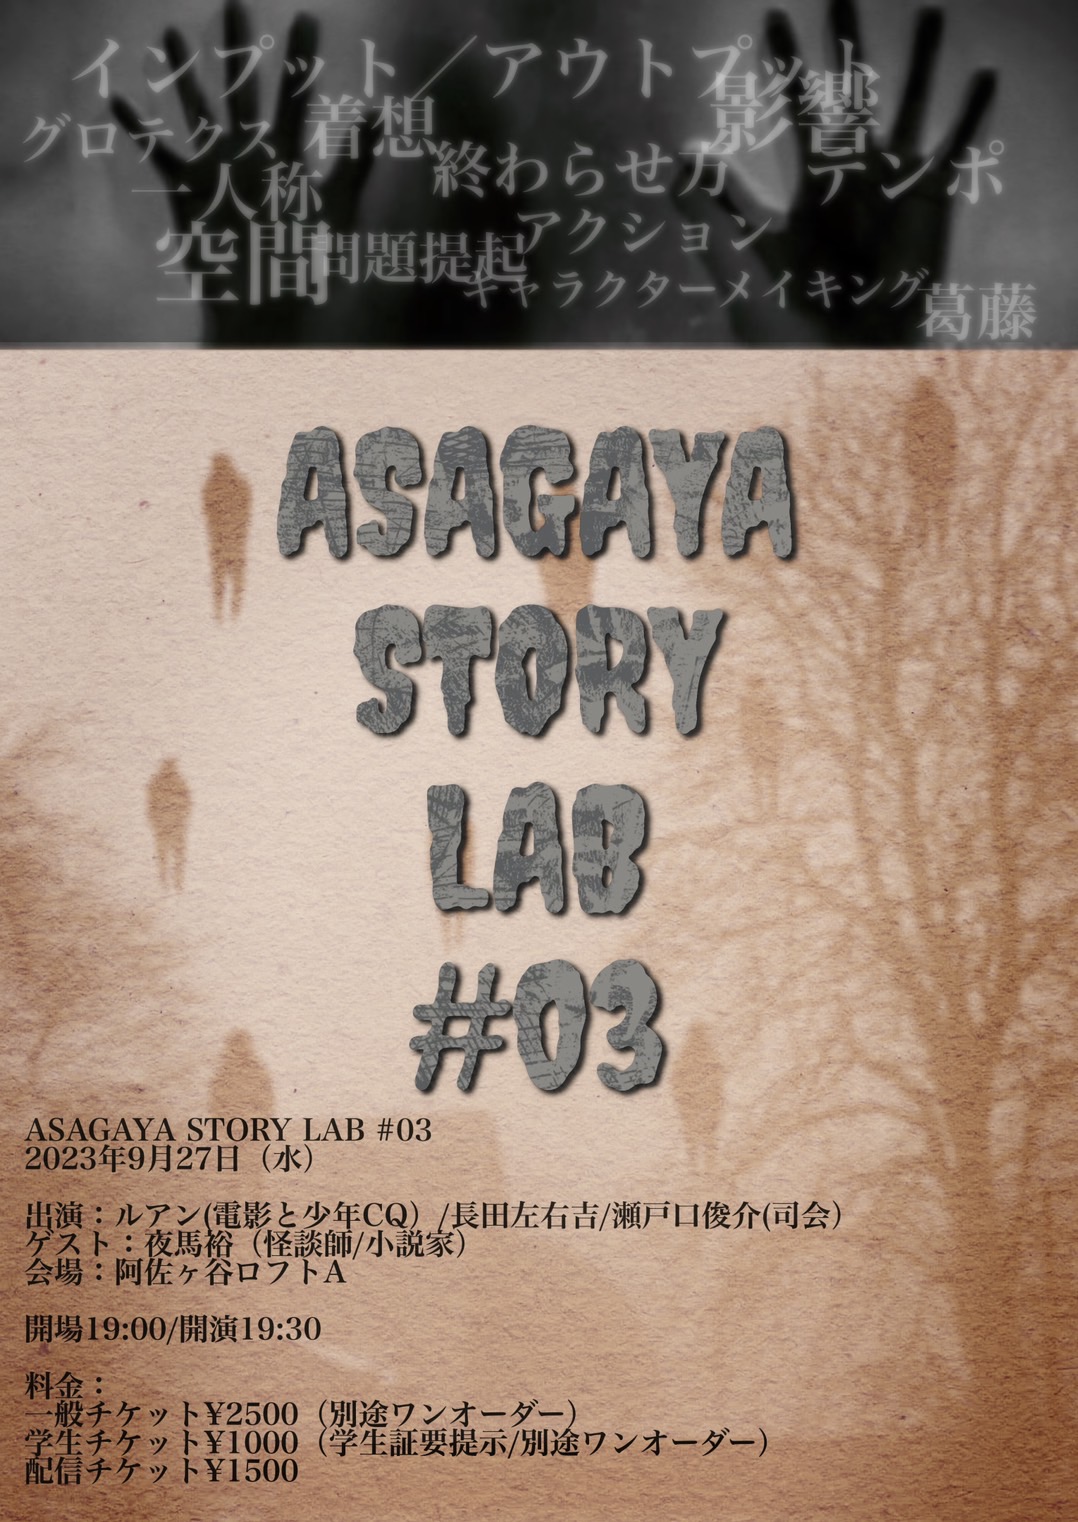 Asagaya Story Lab #3